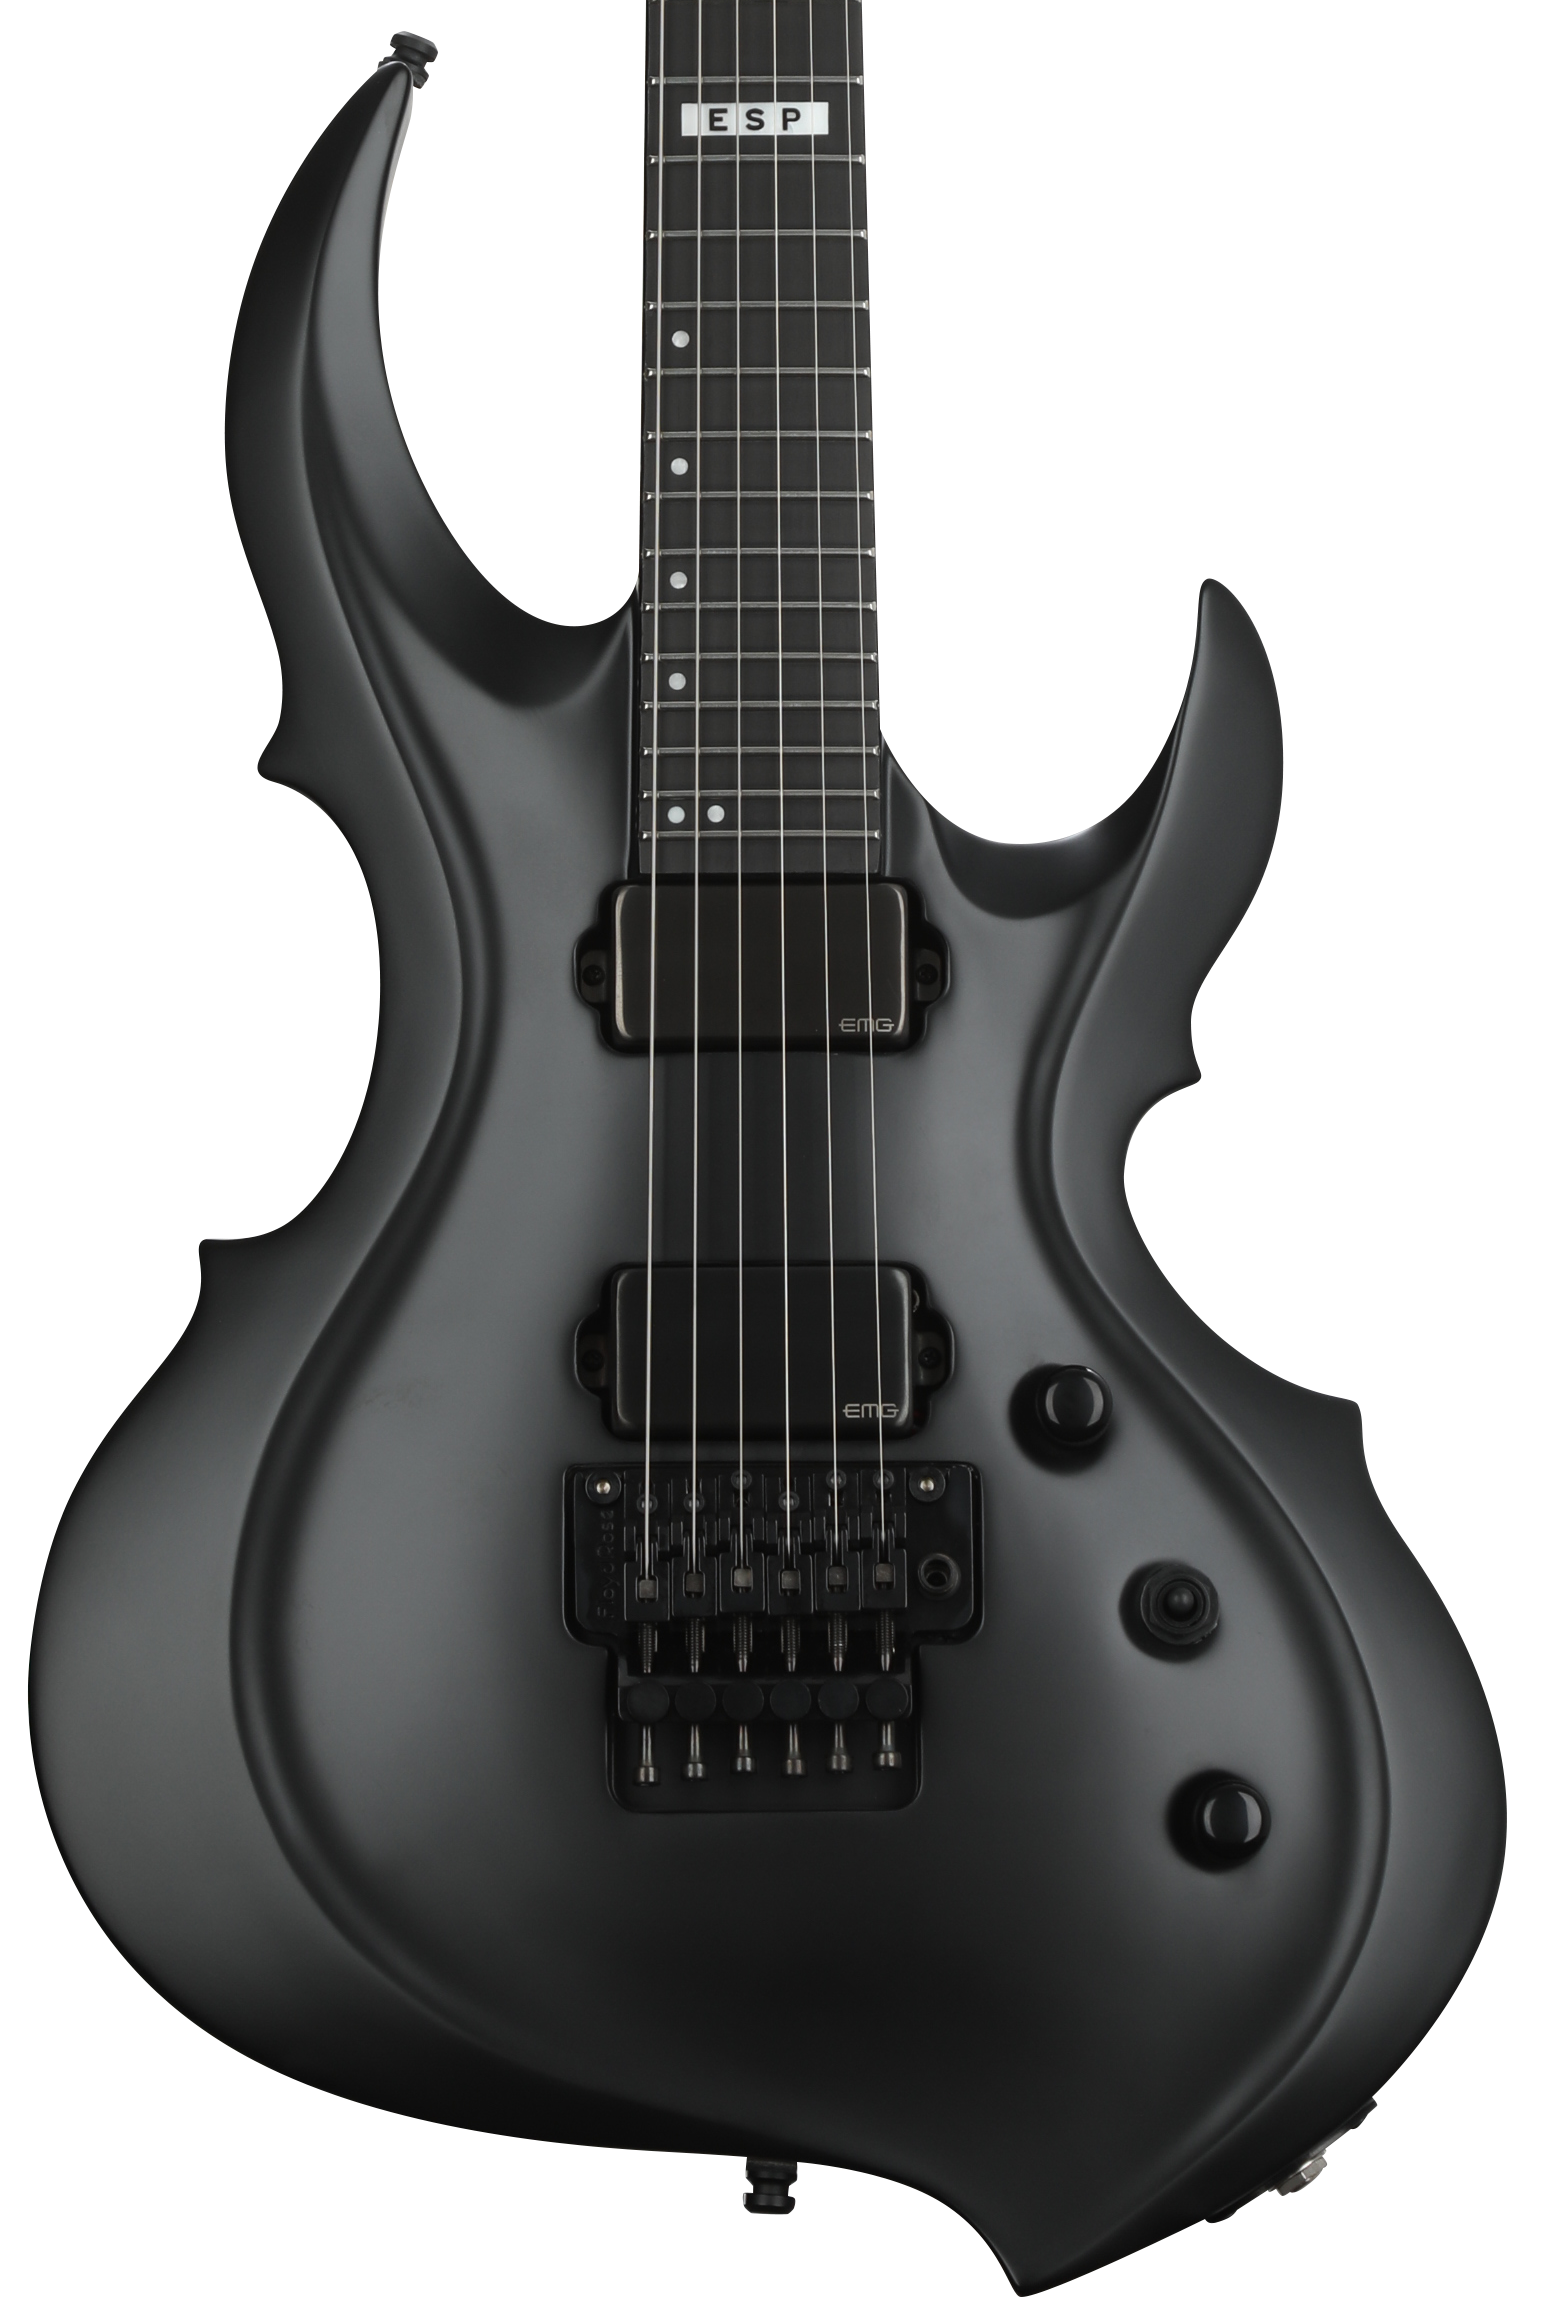 ESP E-II FRX Electric Guitar - Black Satin